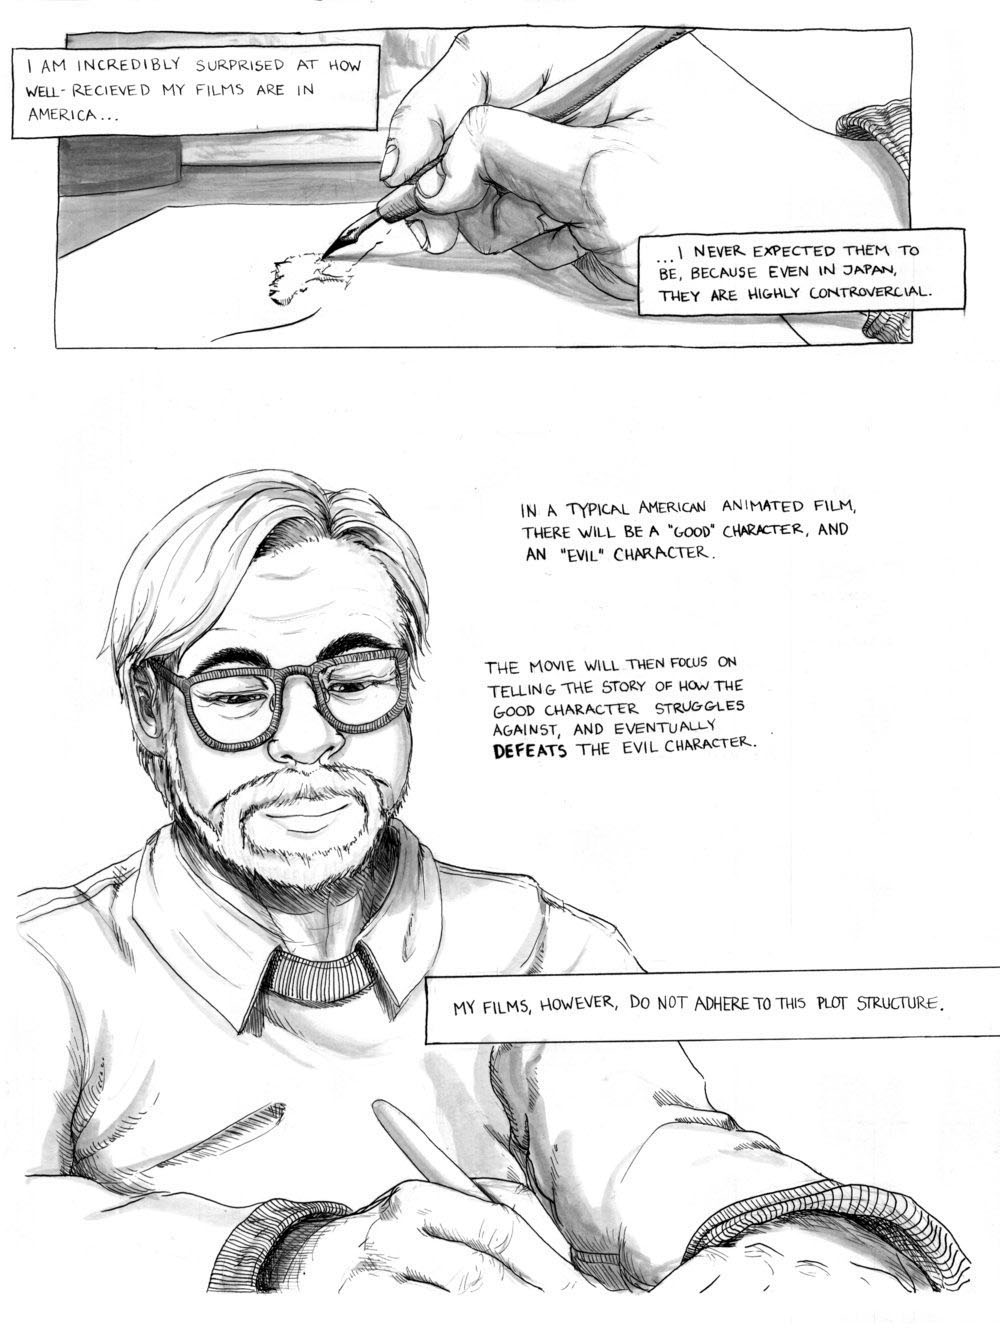 Cartoon Depicts Hayao Miyazaki's Philosophy on Films ...